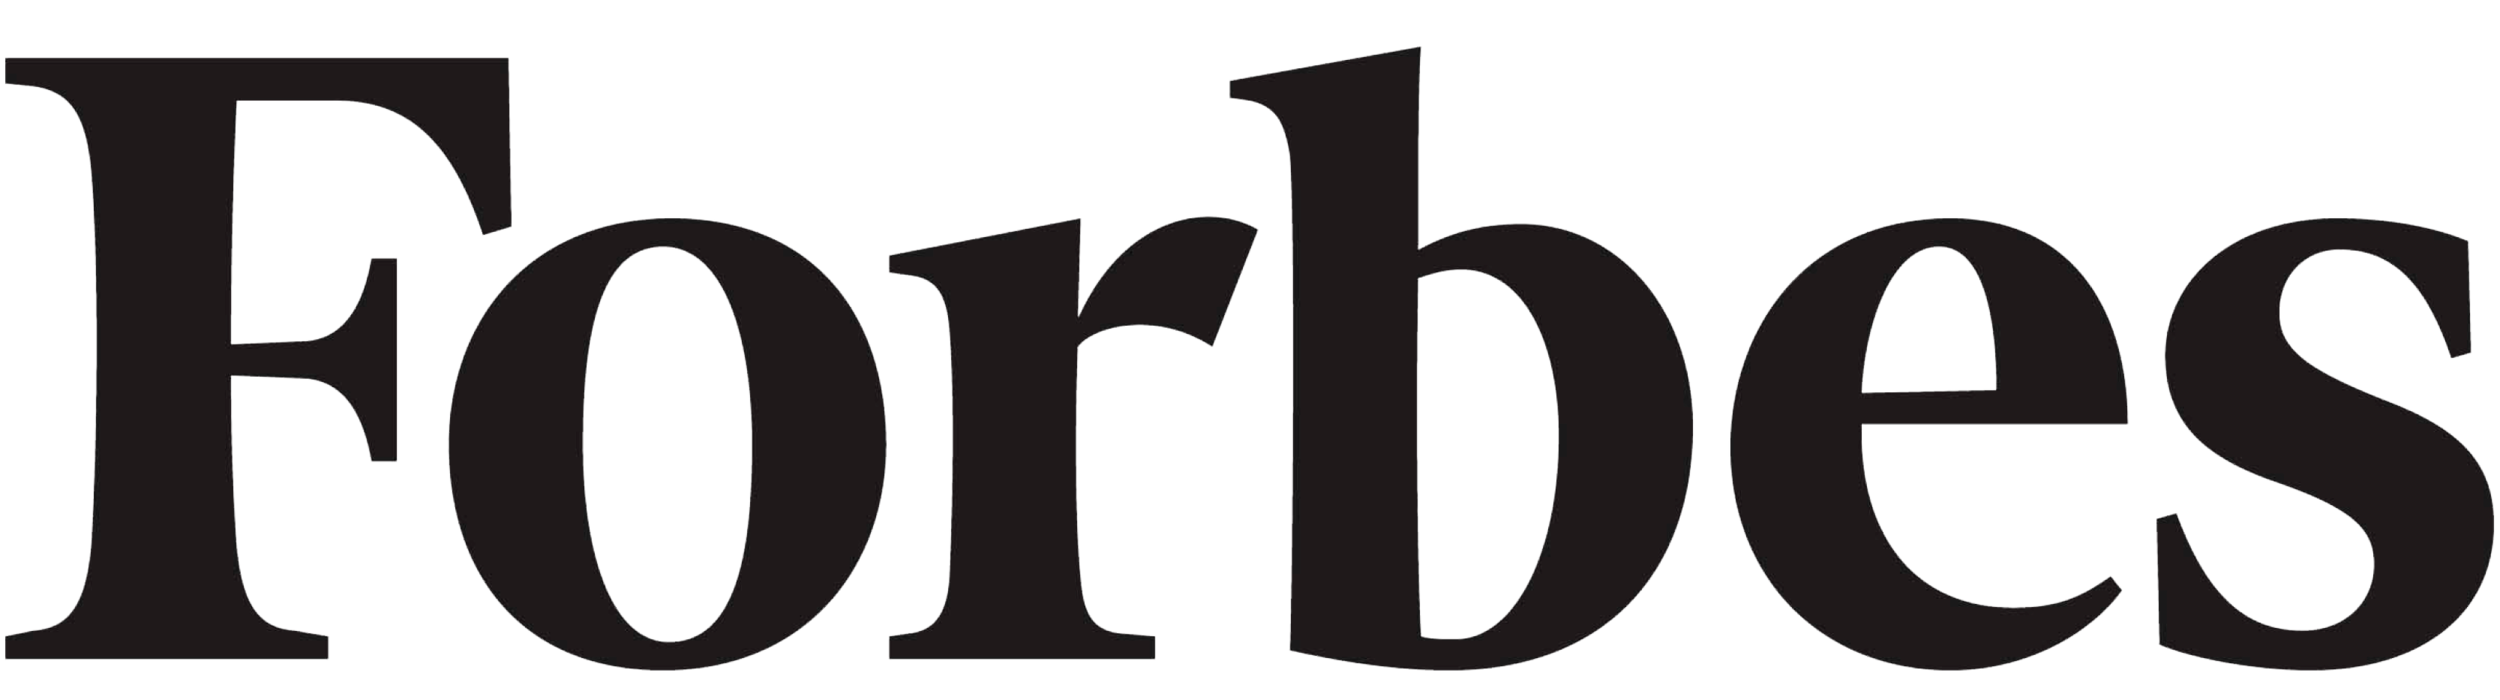 Forbes-Black-Logo-PNG-03003-e1479822757321.png